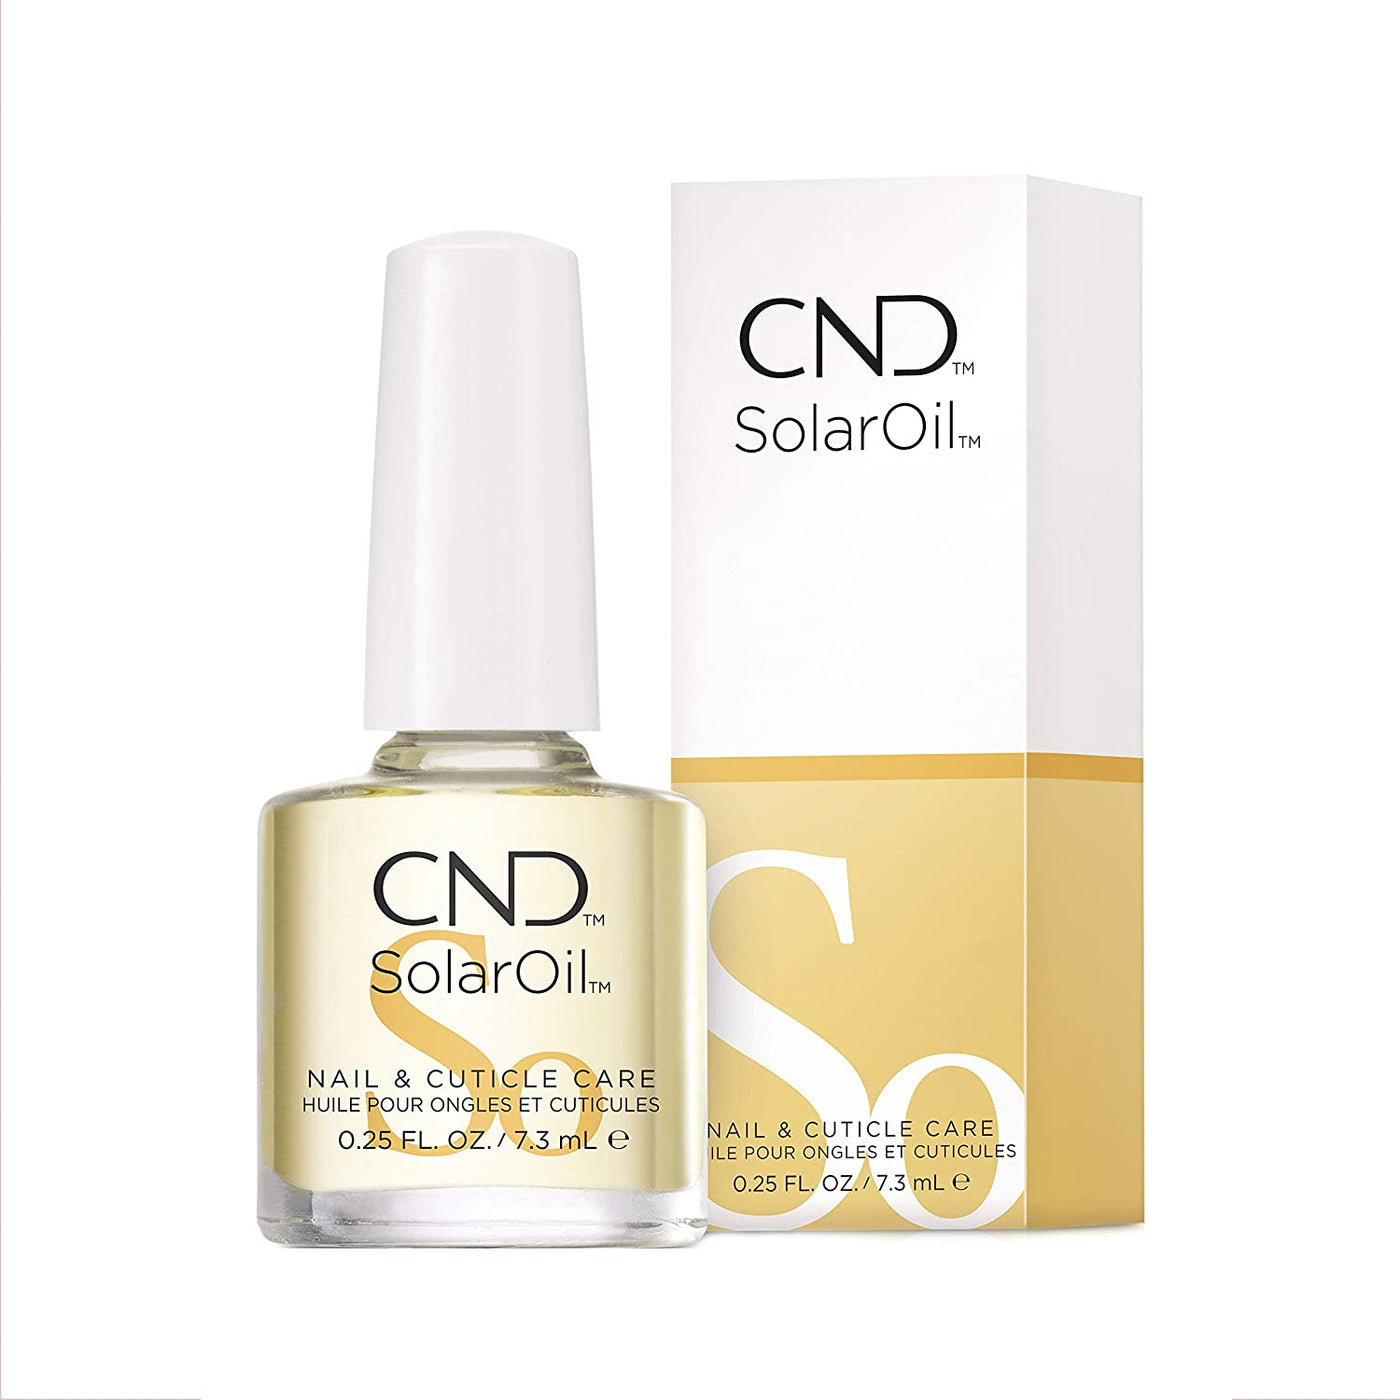 CND Solar Oil Nail & Cuticle Care